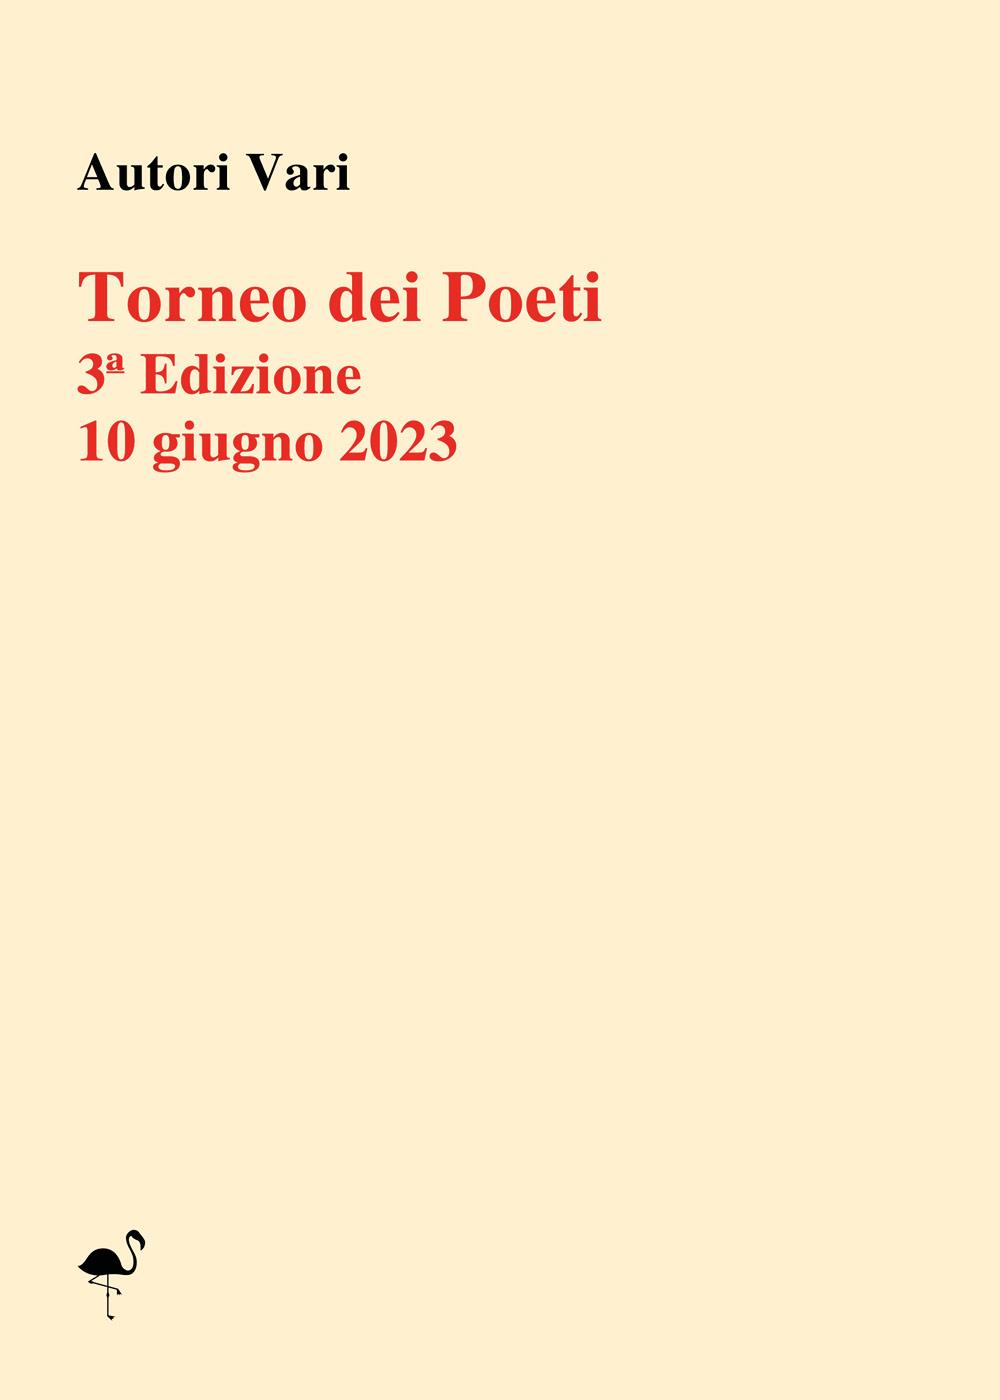 Torneo dei poeti 20/23